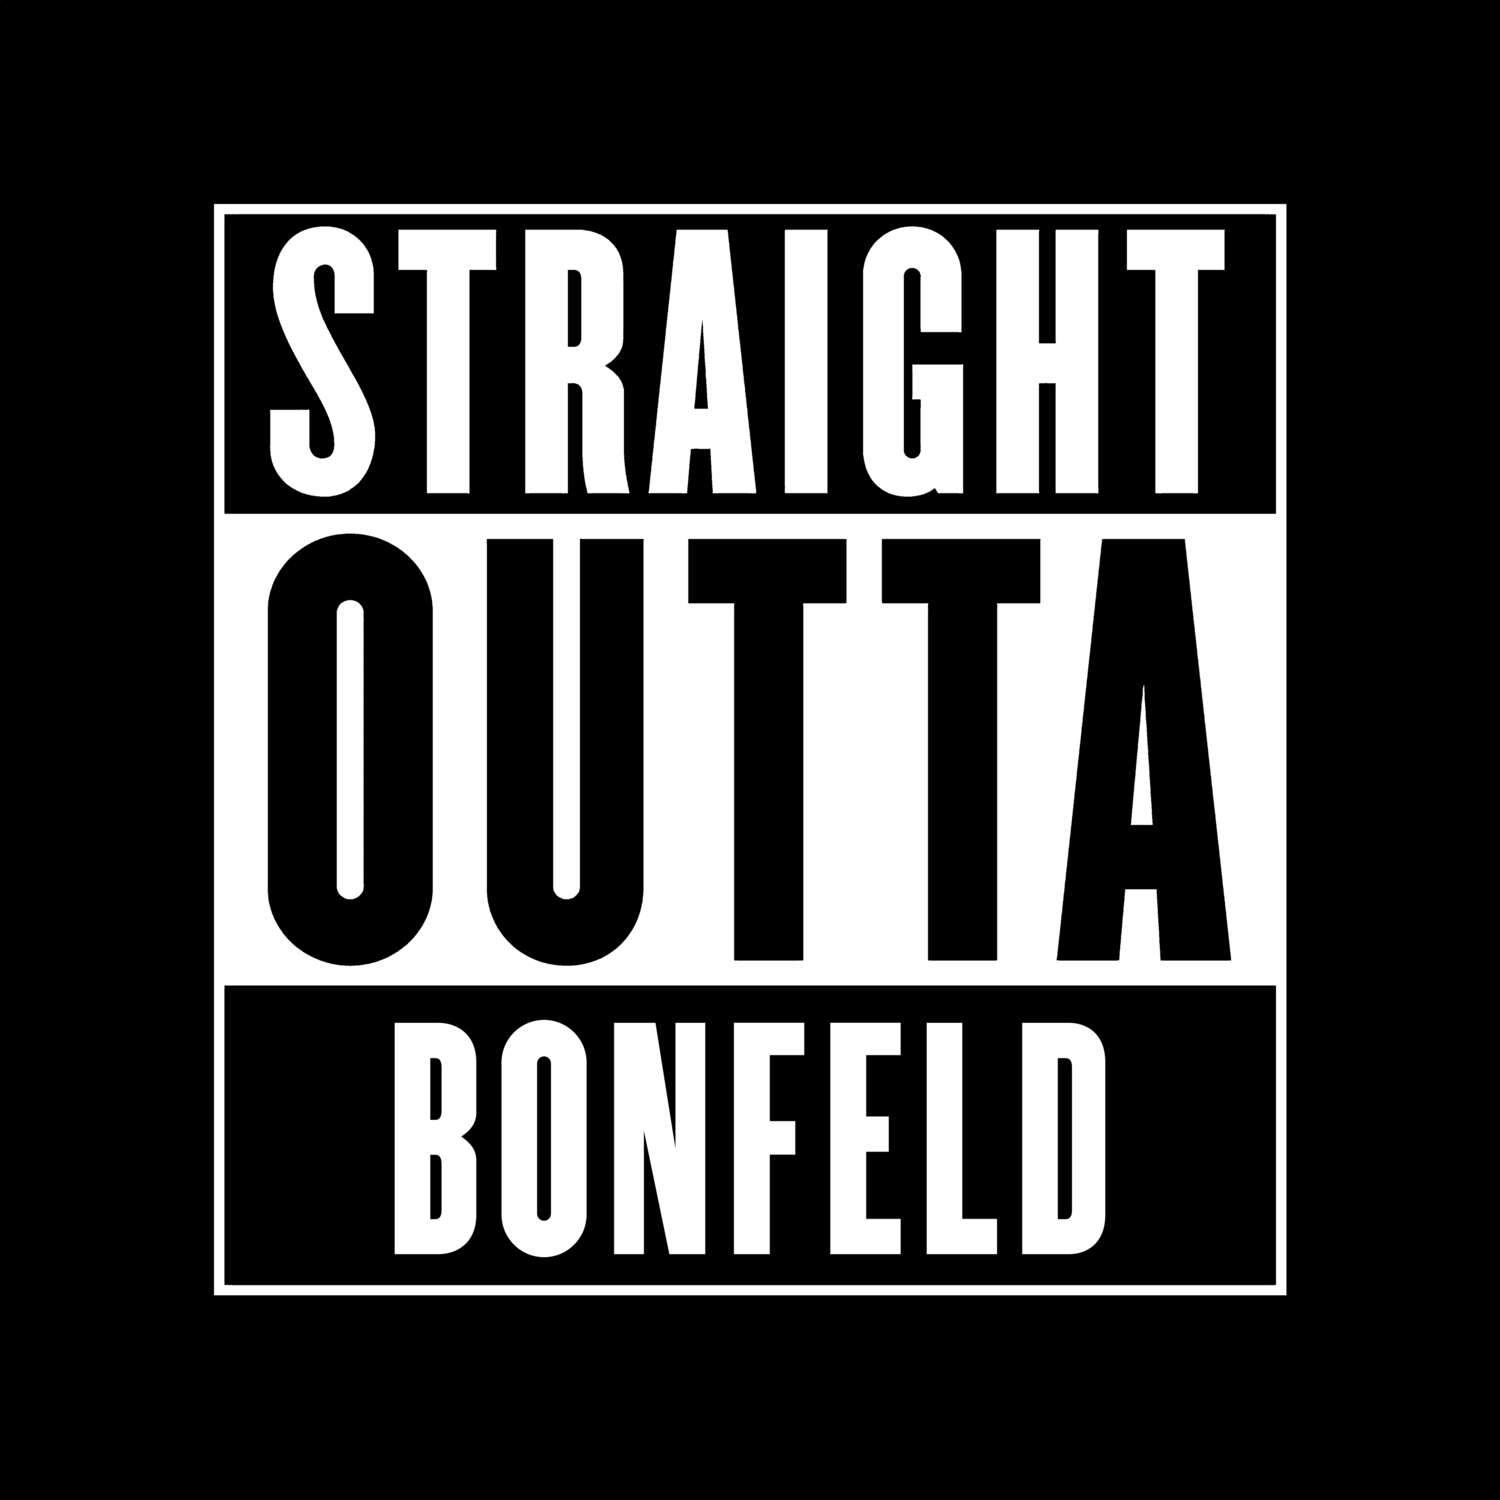 Bonfeld T-Shirt »Straight Outta«